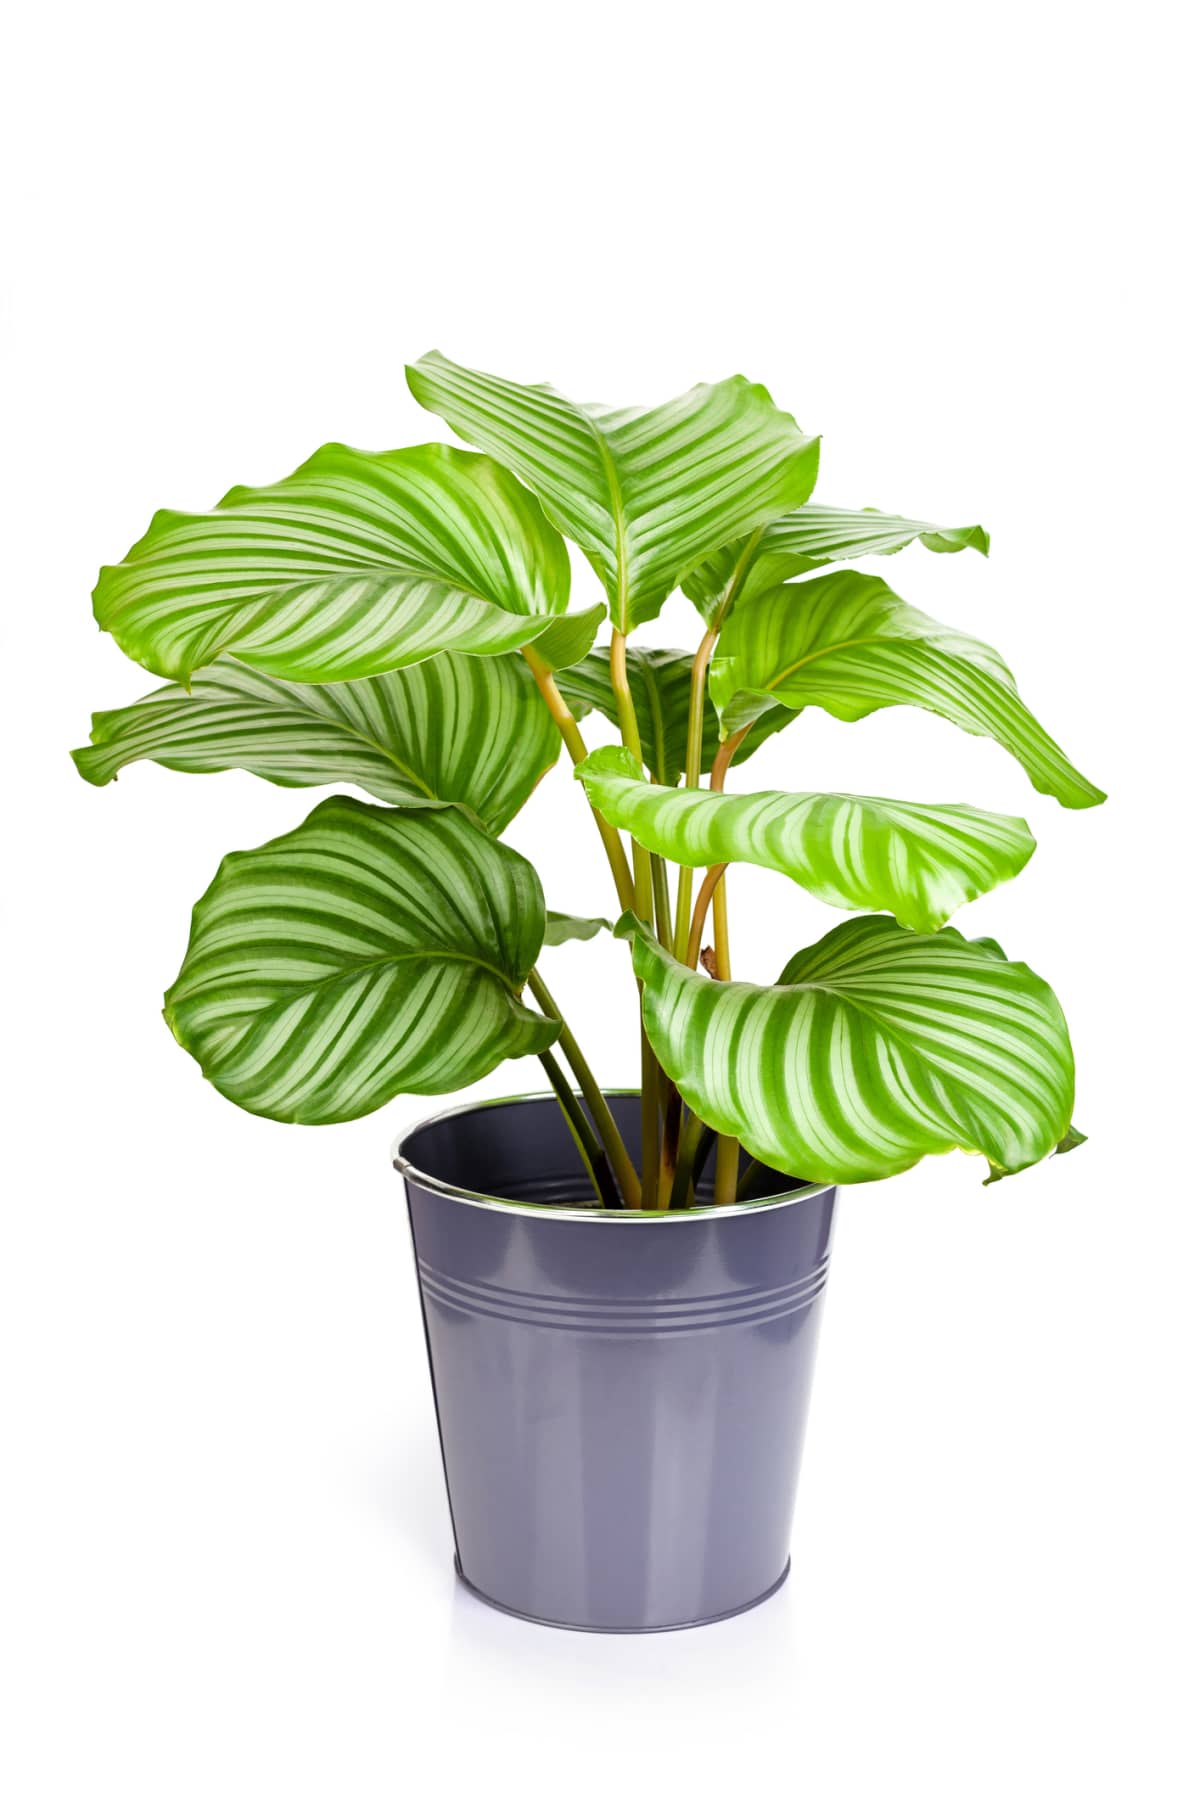 Calathea orbifolia plant in pot, Tropical plant isolated on white background